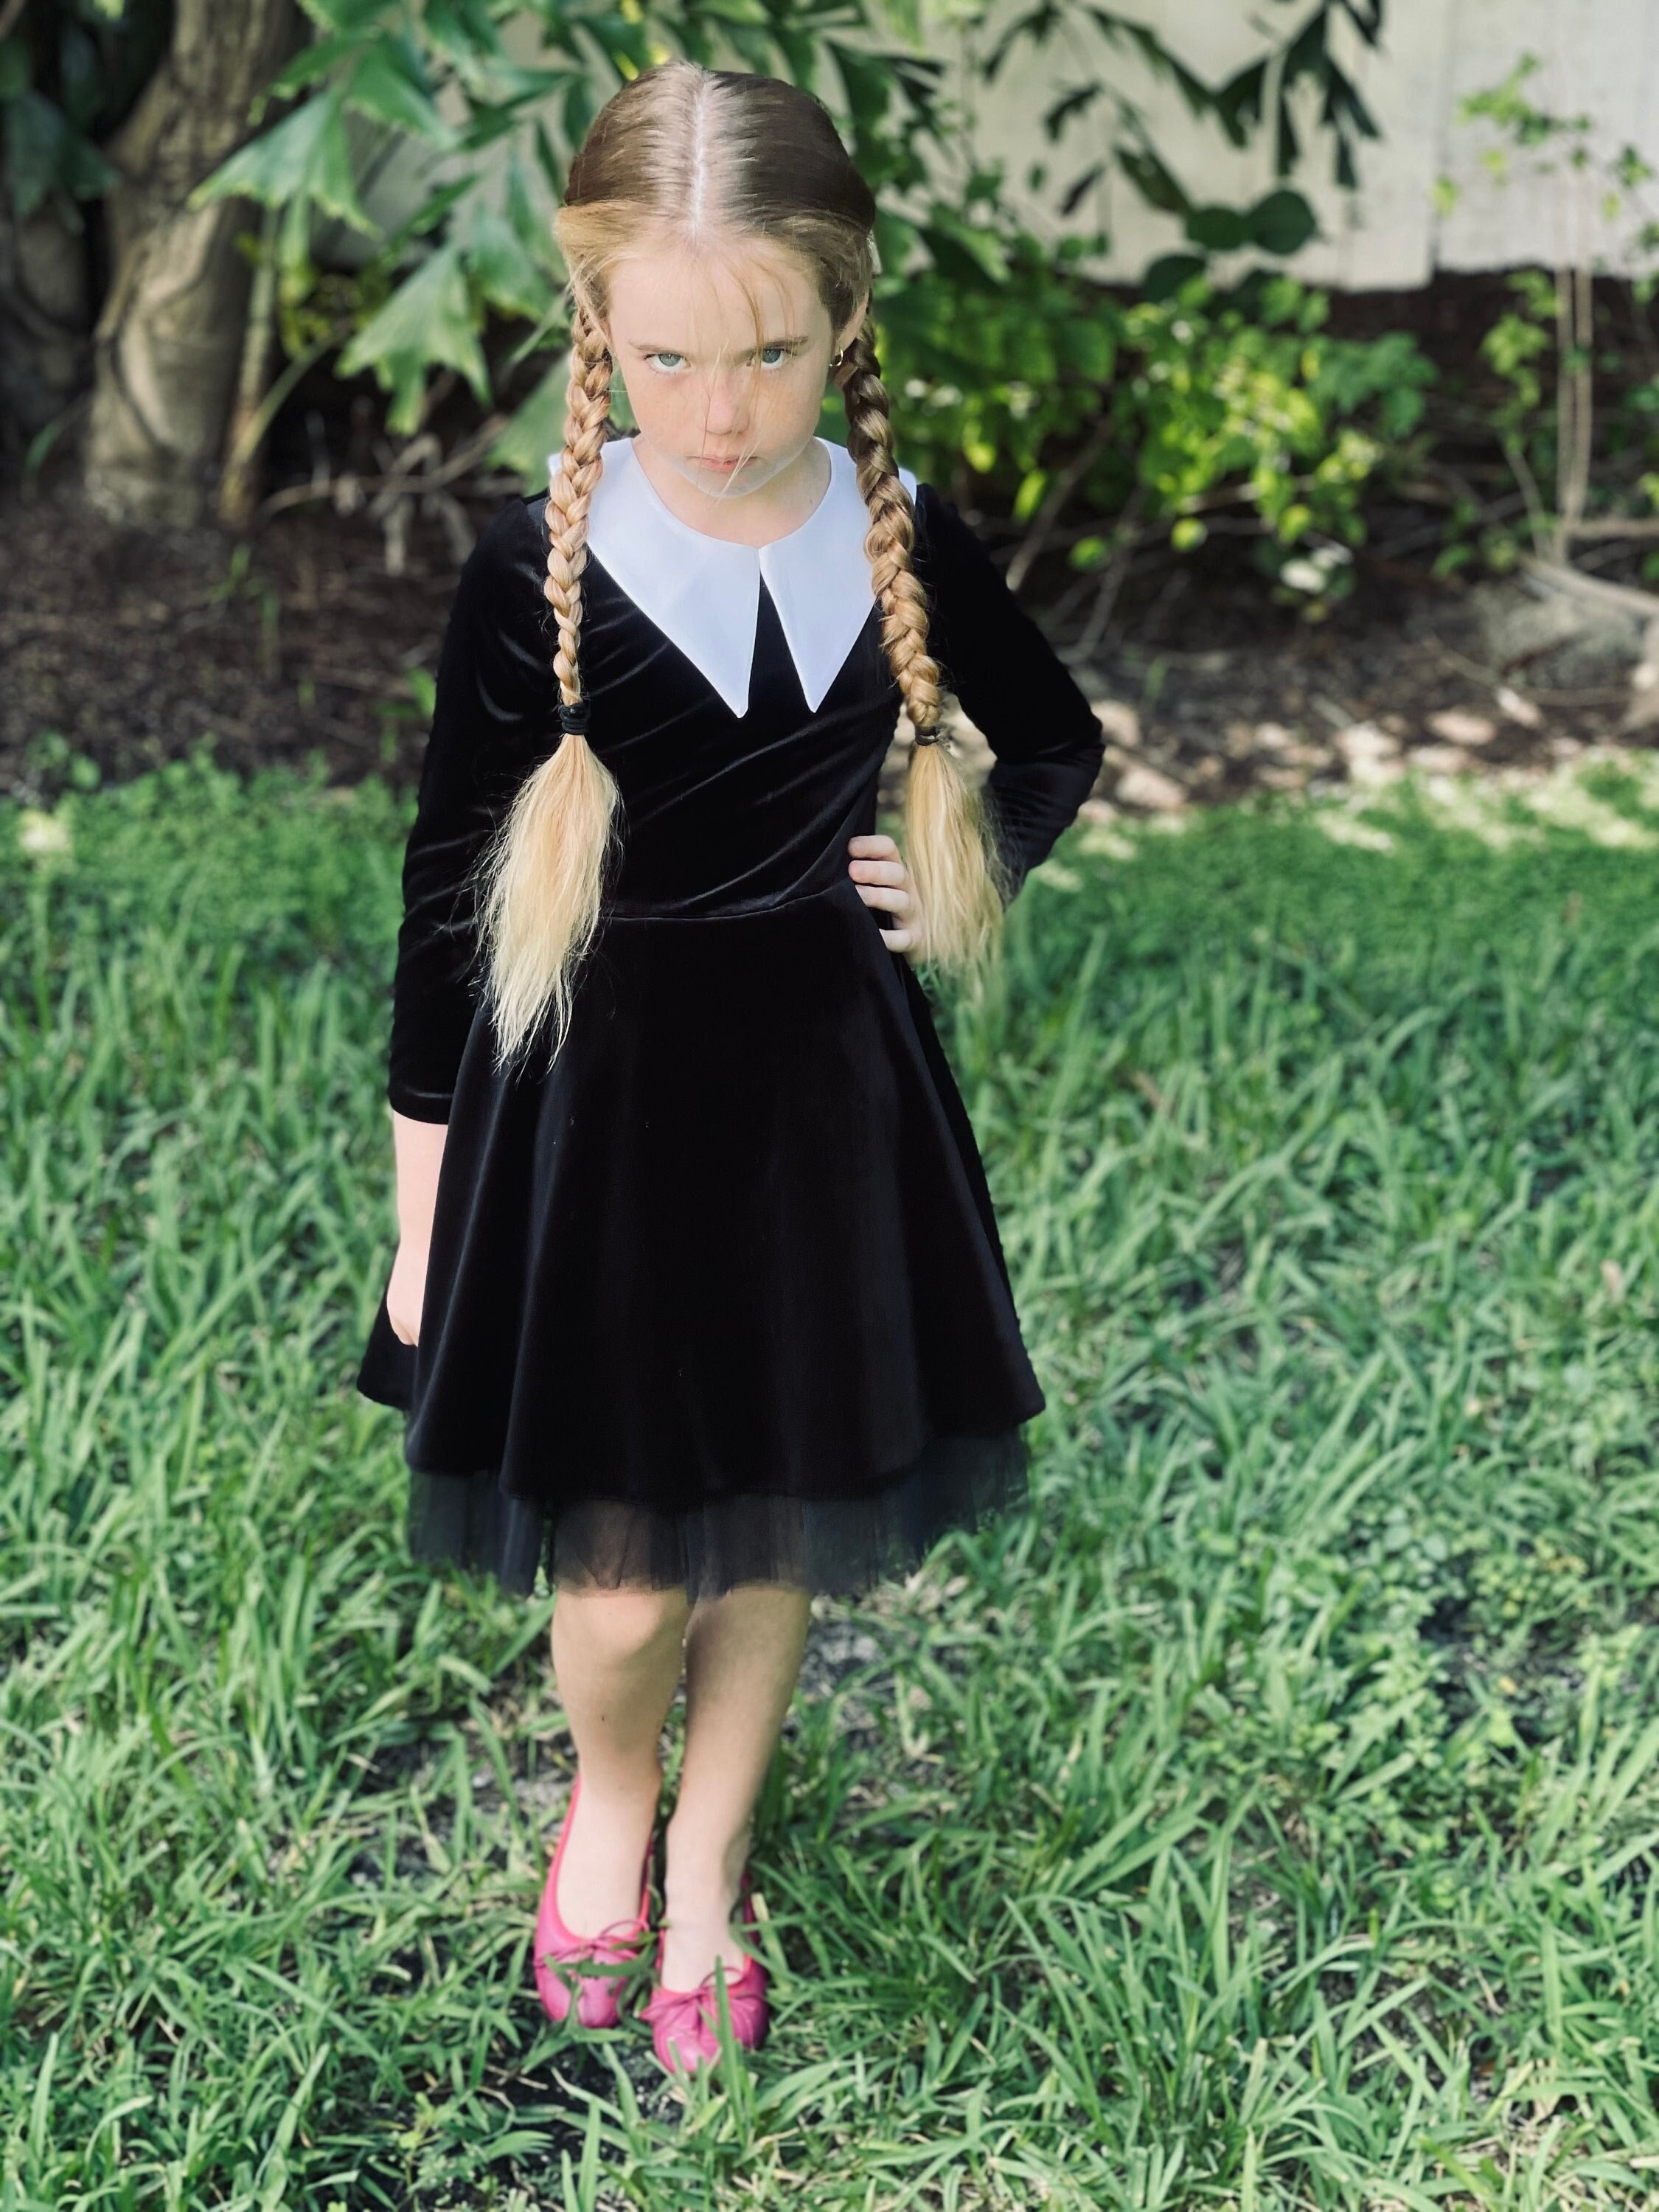 Kid's Gothic Stitch Witch Costume